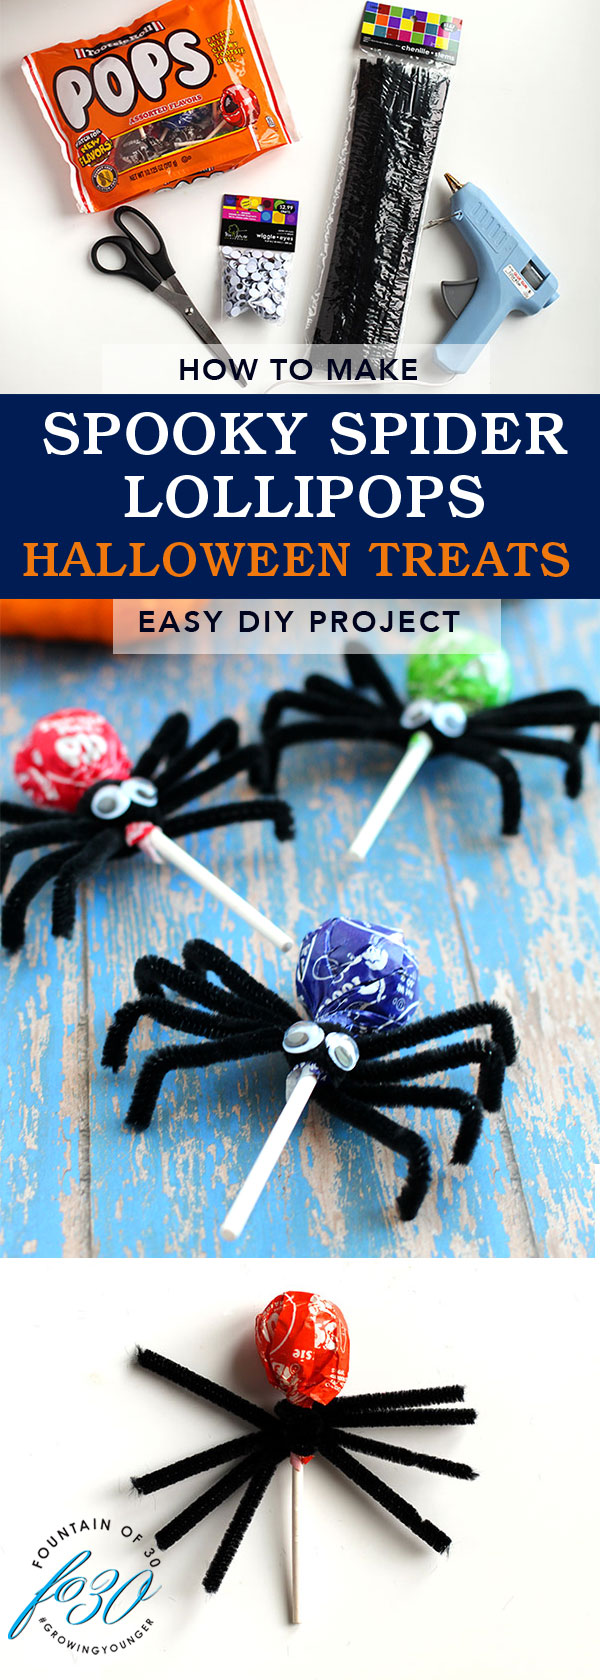 spooky spider lollipops easy halloween treats fountainof30